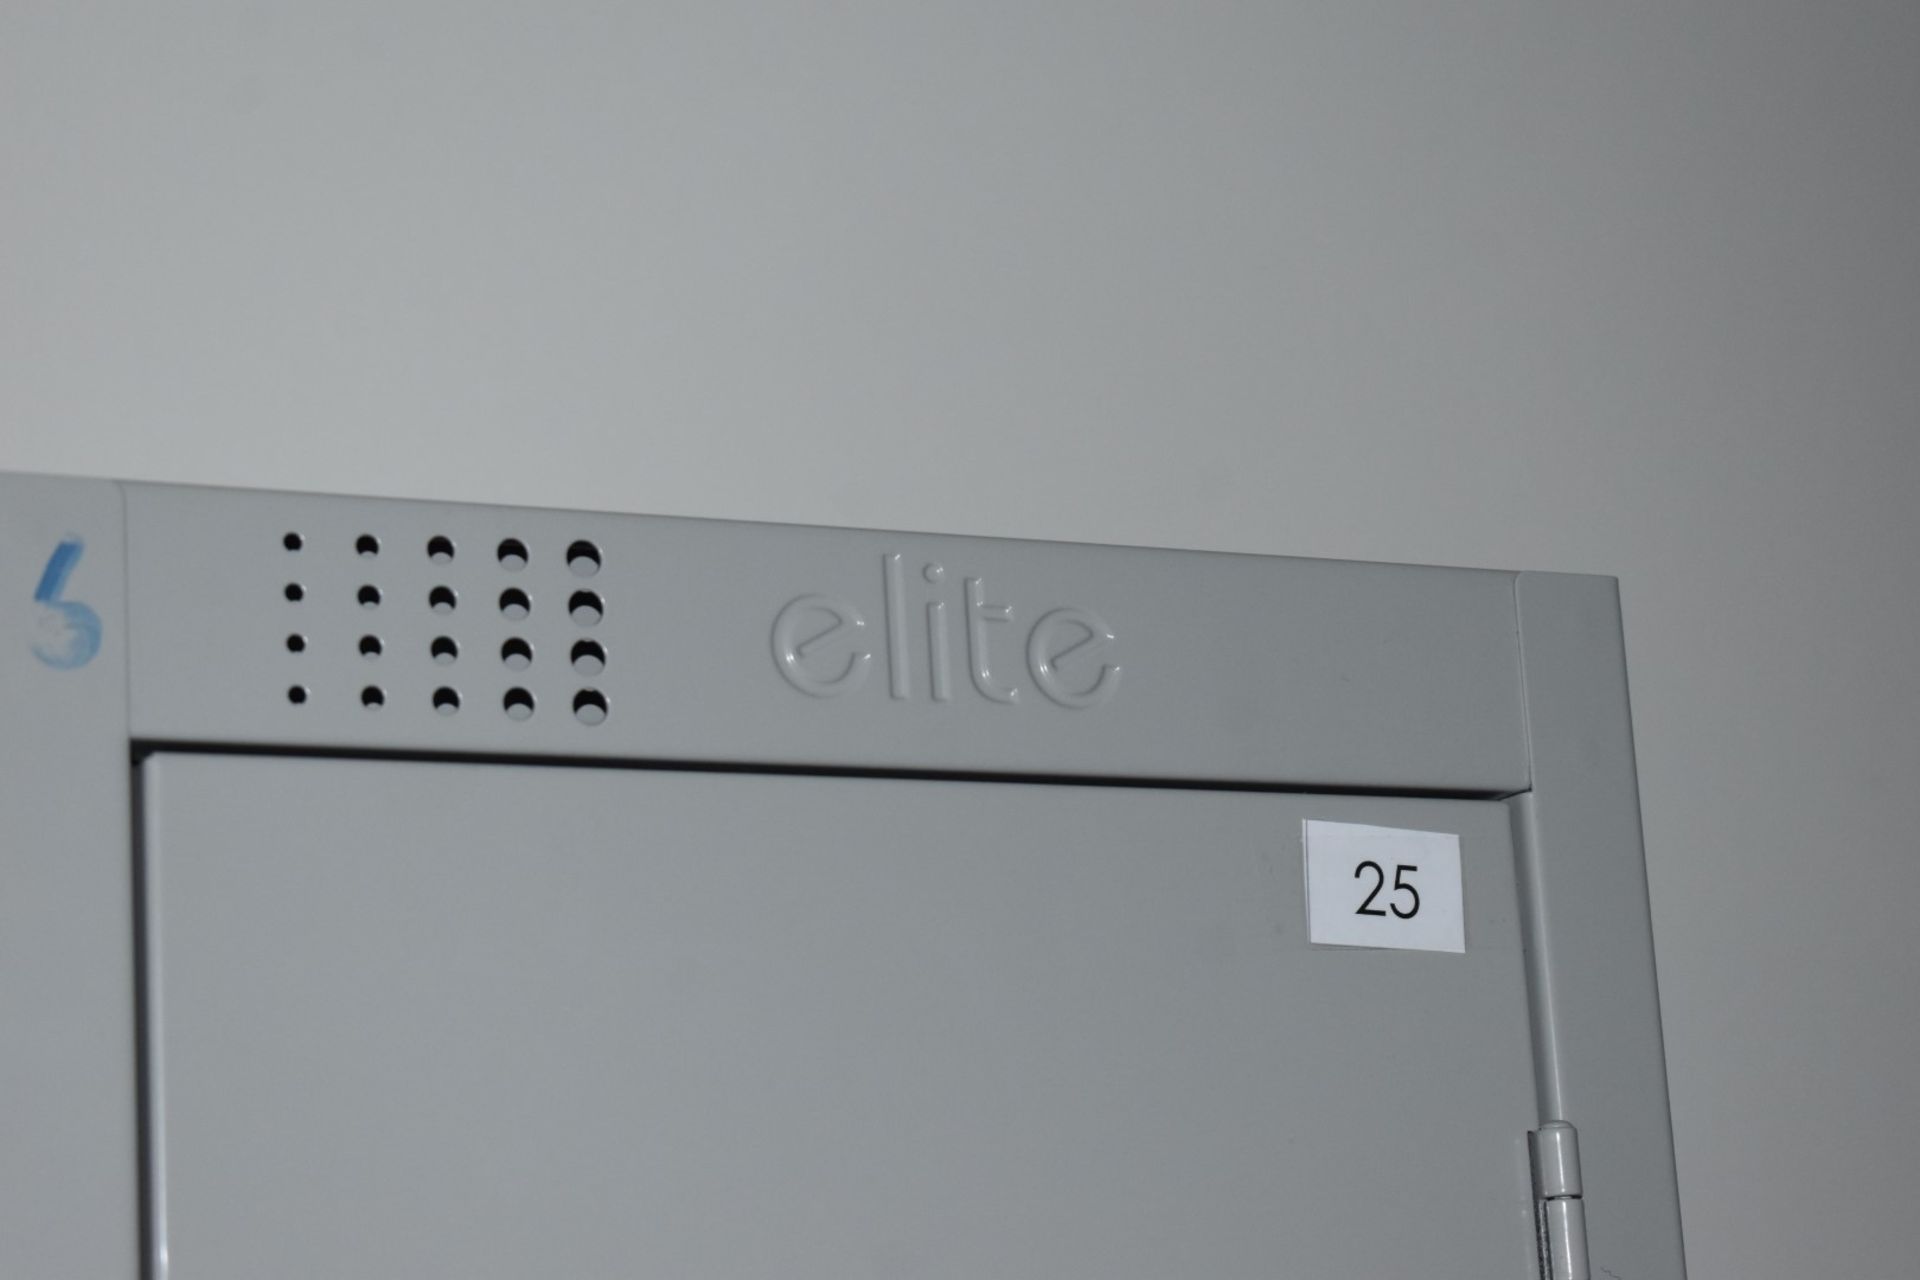 1 x Elite Four Door Staff Locker Without Keys - Includes Waste Bin - Ref: FF147 U - CL544 - - Image 2 of 3